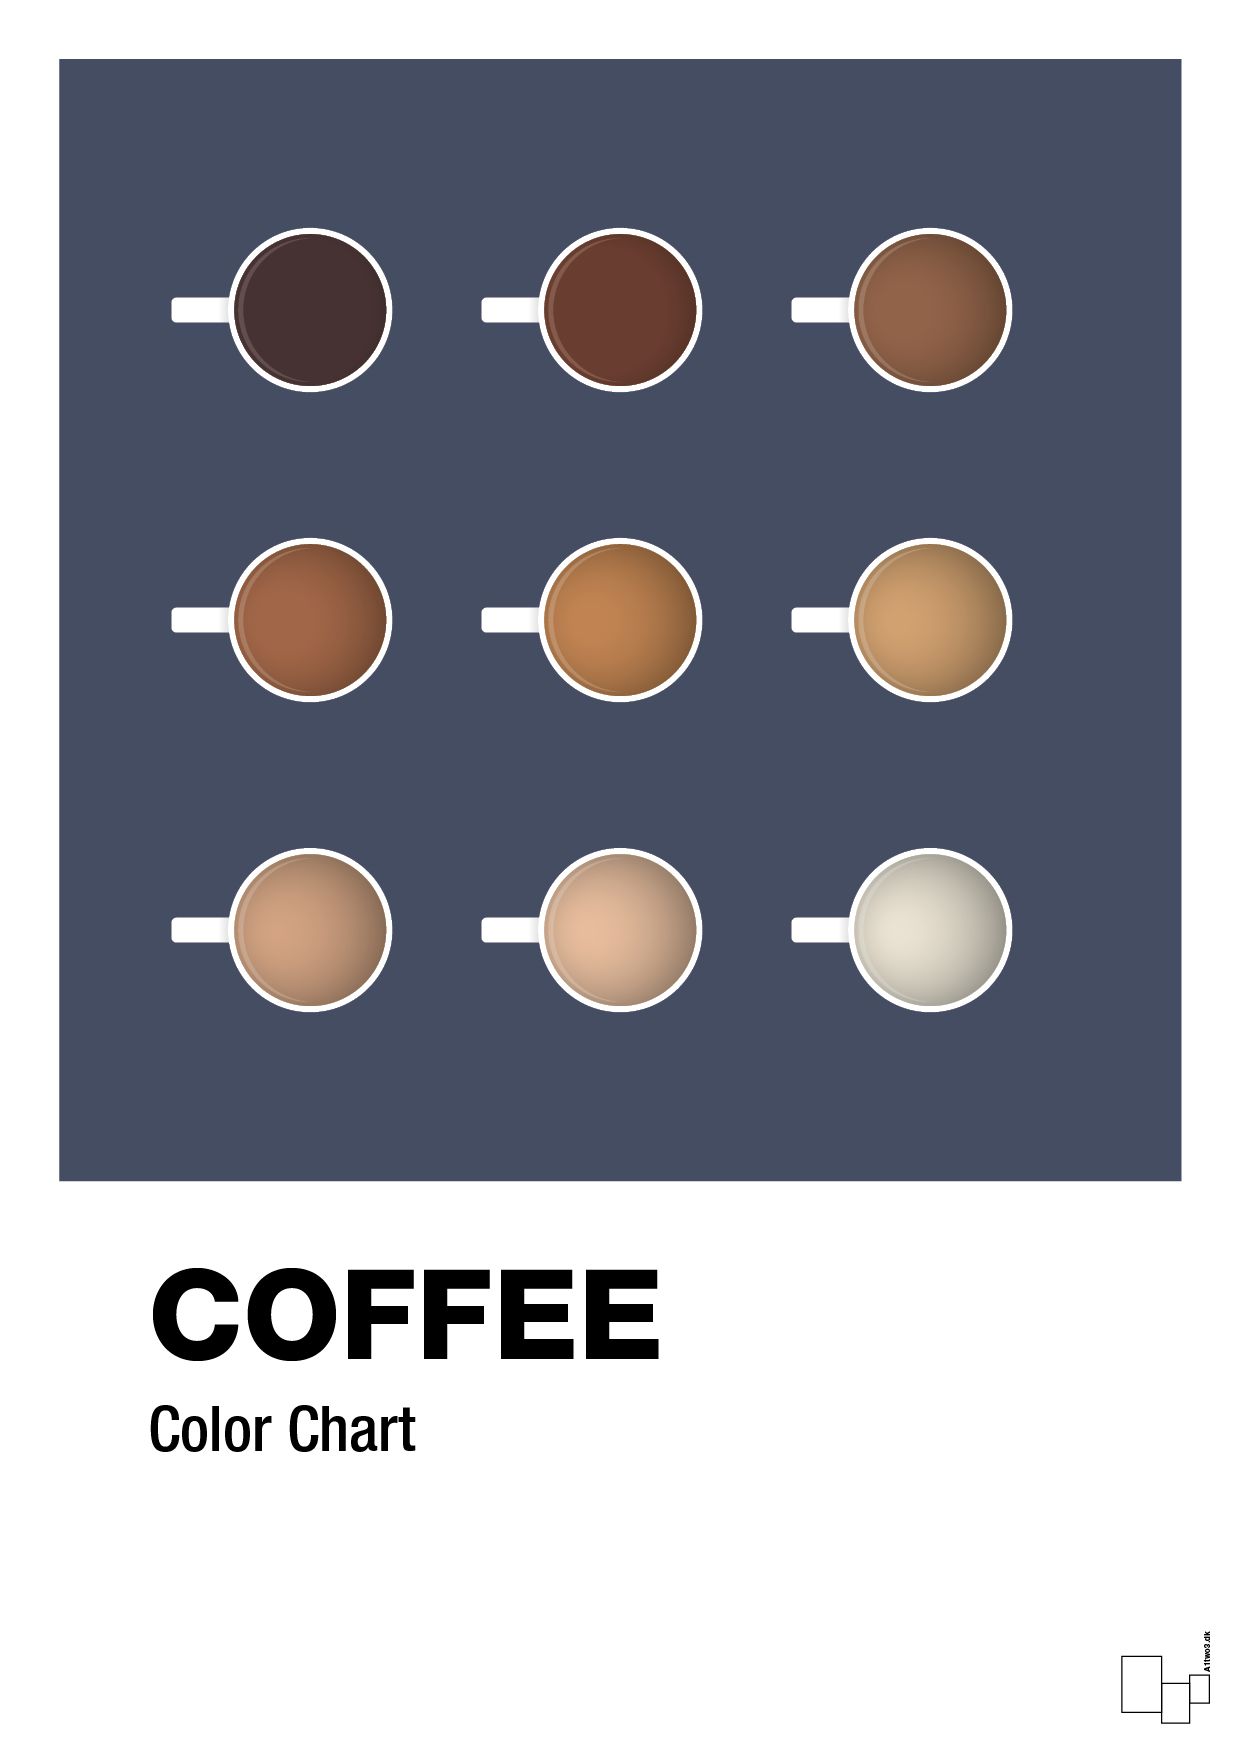 coffee color chart - Plakat med Mad & Drikke i Petrol